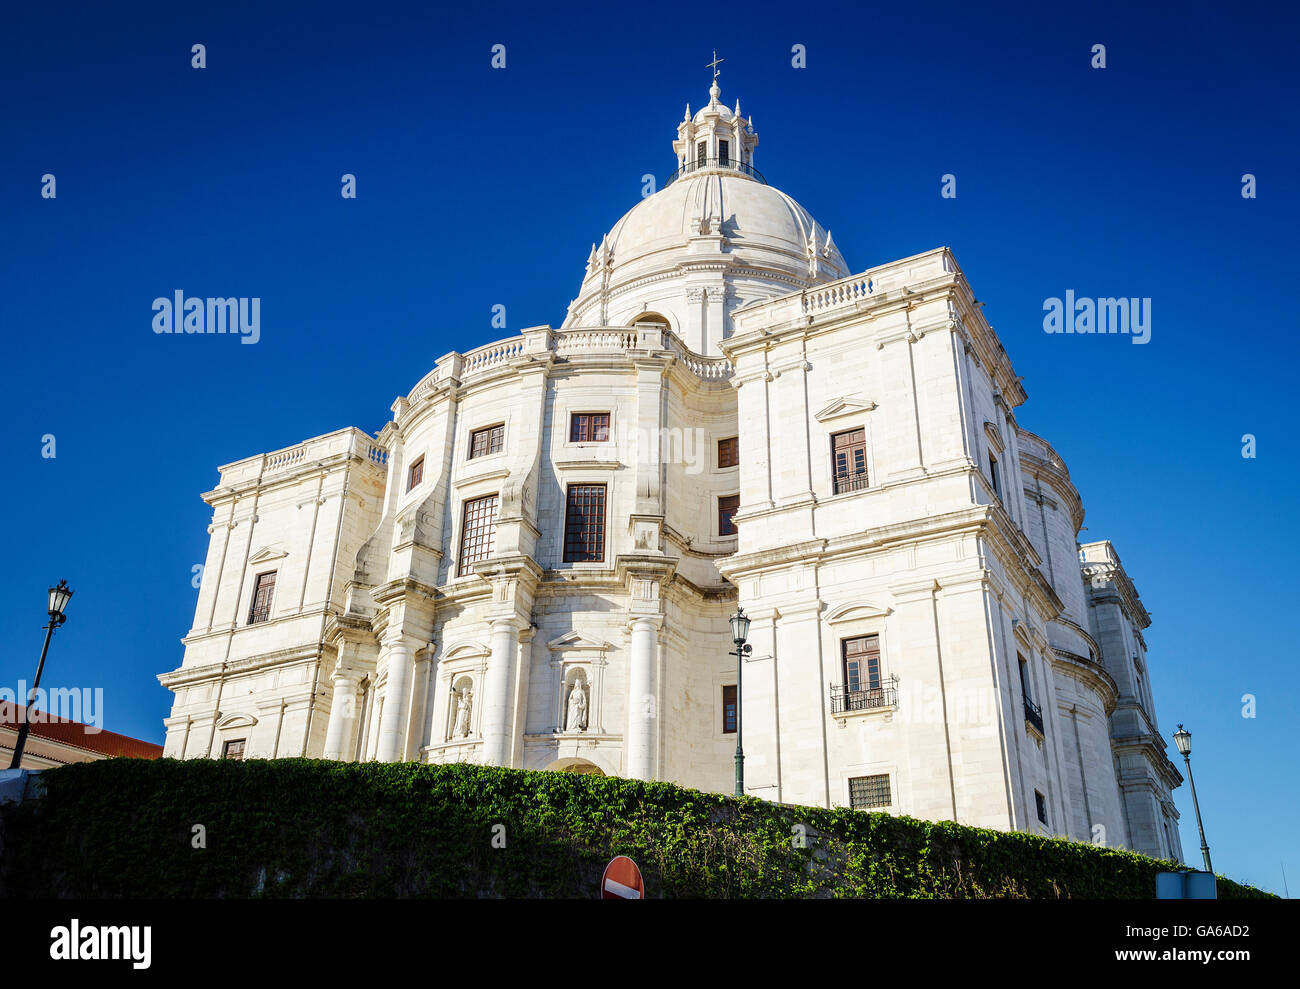 panteao nacional pantheon famous landmark old cathedral church in lisbon portugal Stock Photo